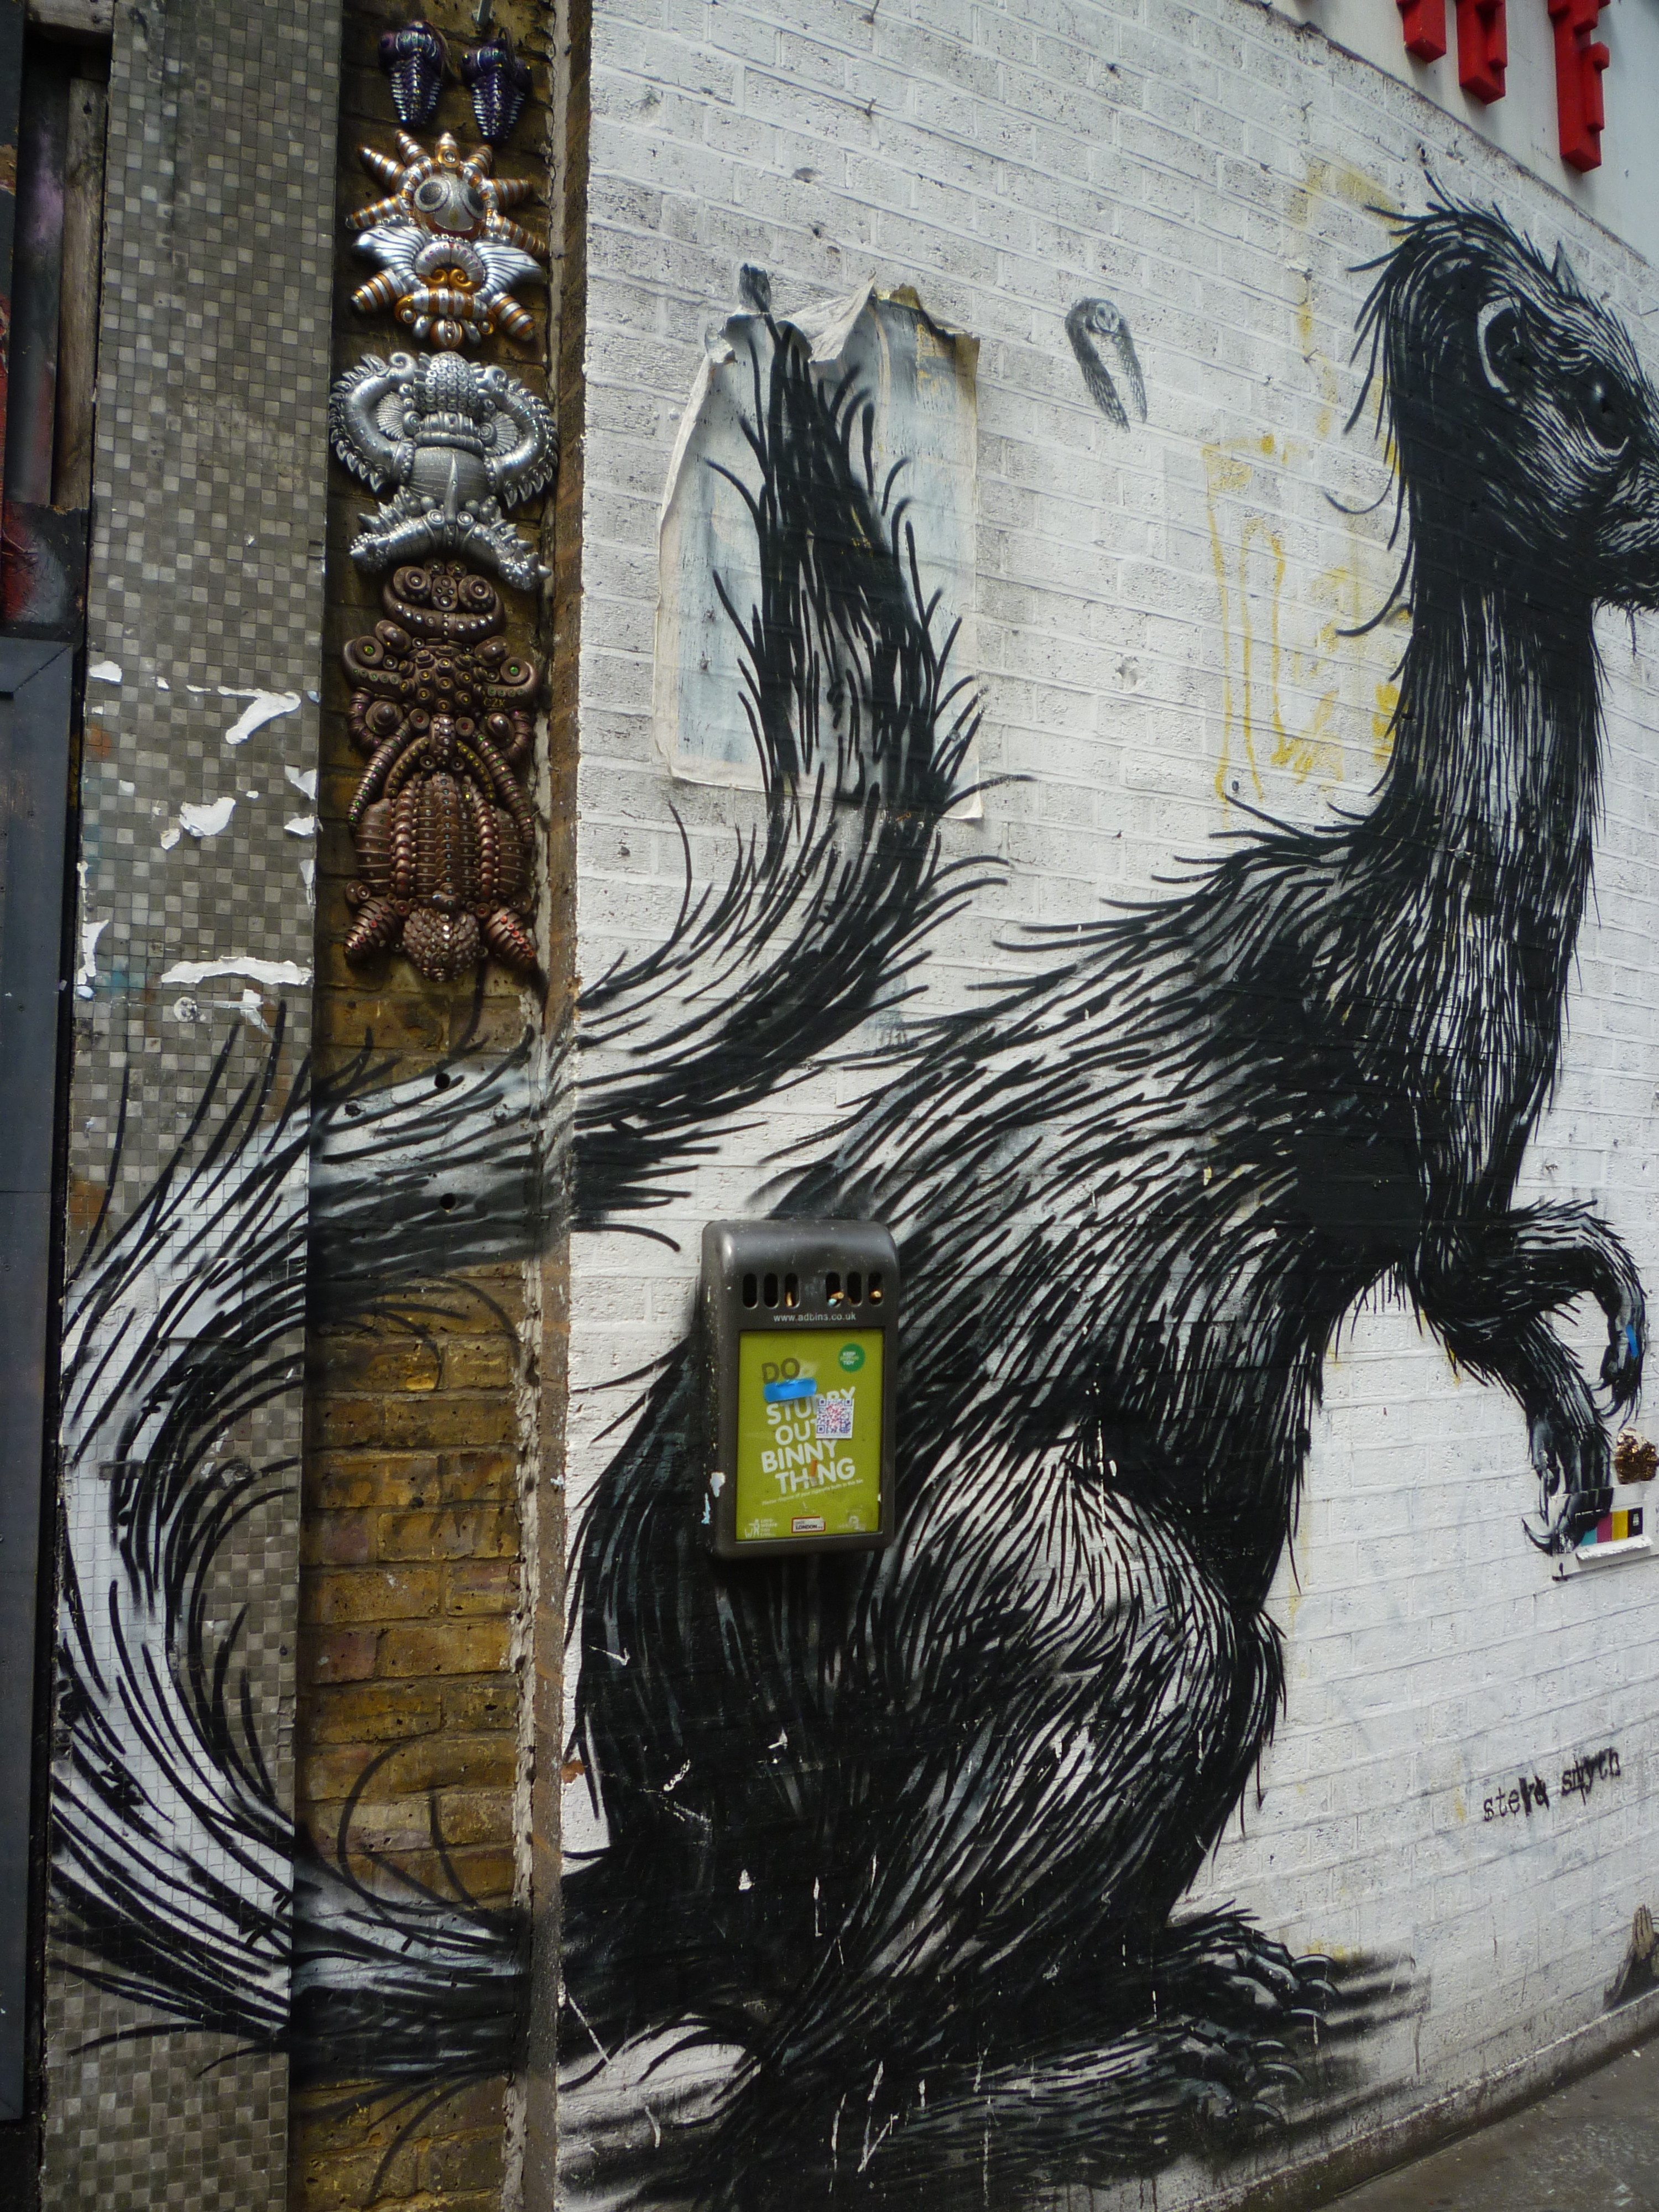 Street Art in London 2 - more variety